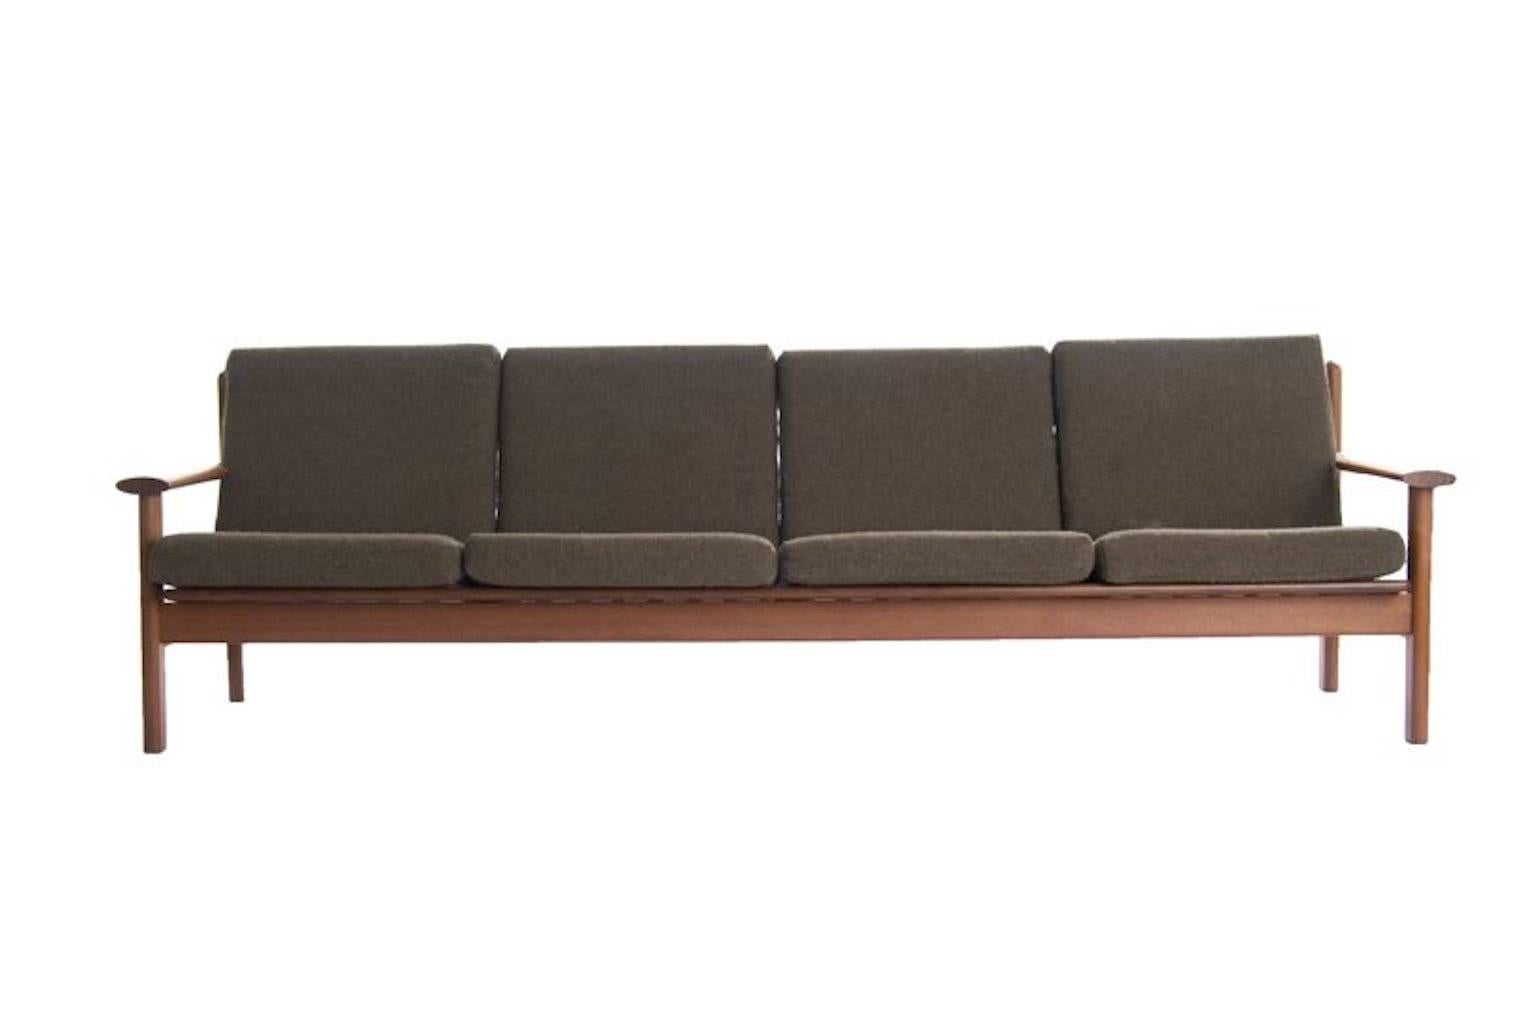 20th Century Danish Modern Sofa and Lounge Chair